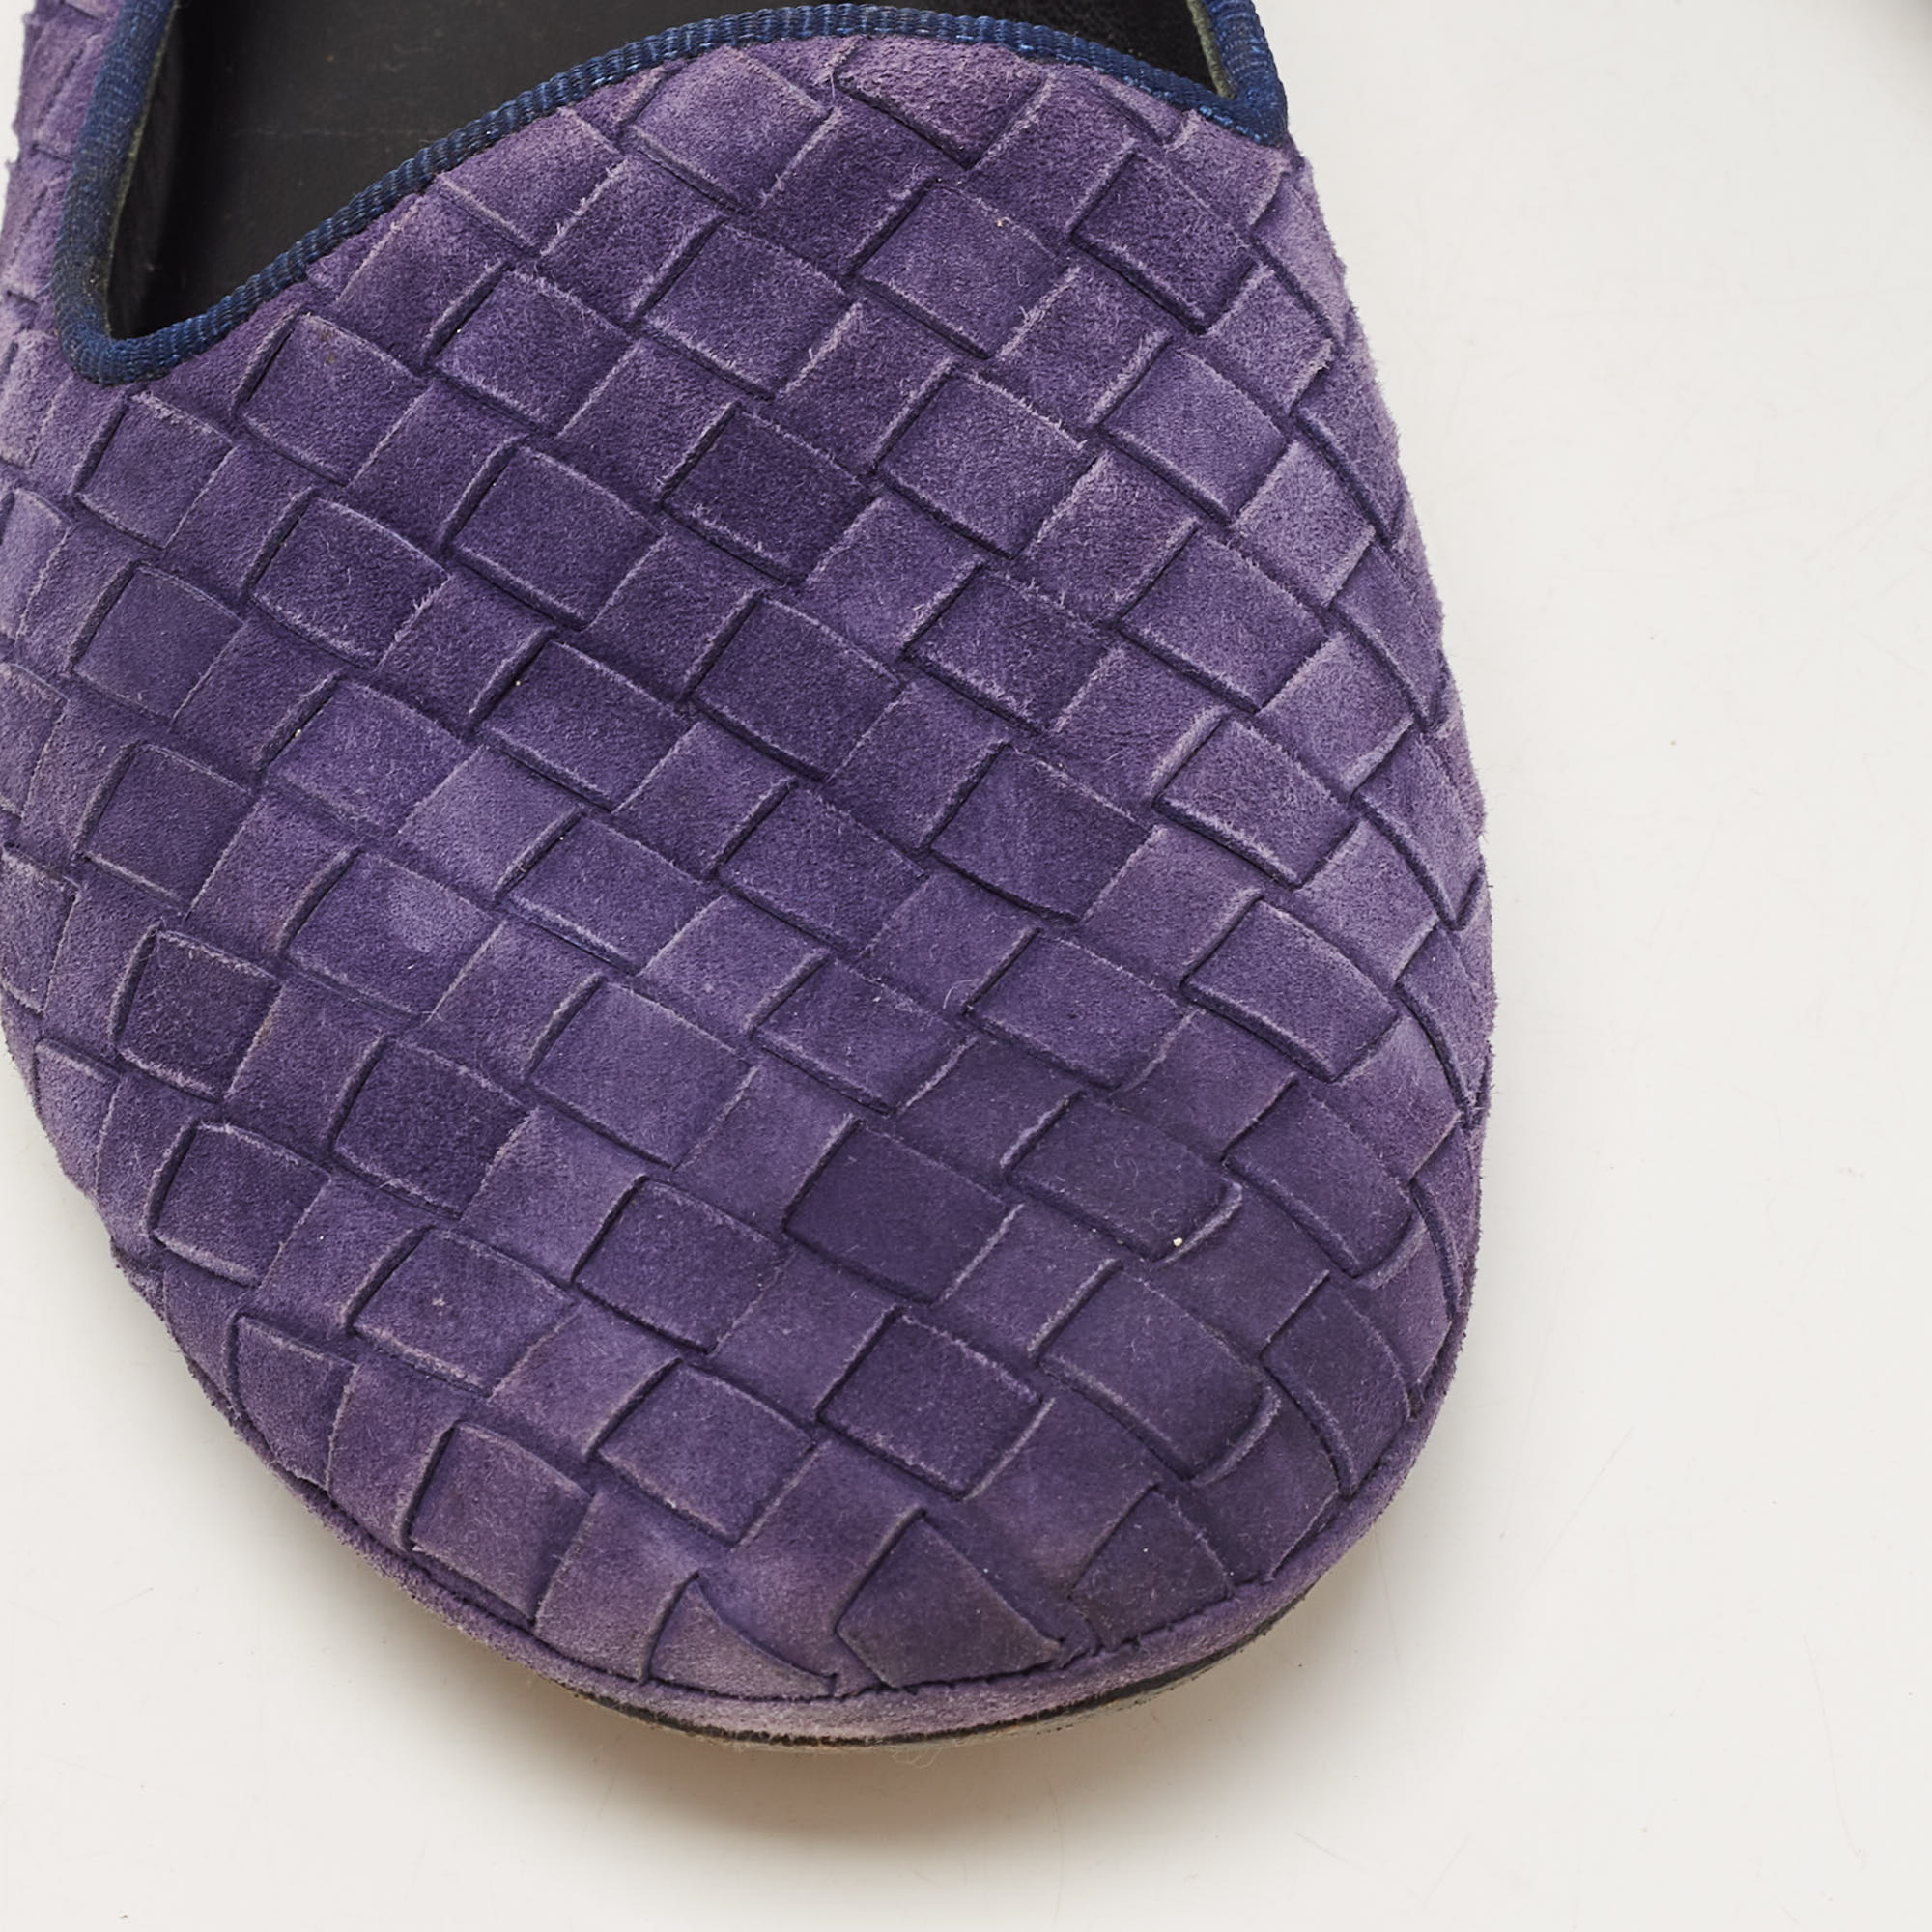 Bottega Veneta Purple Intrecciato Suede Smoking Slippers Size 39